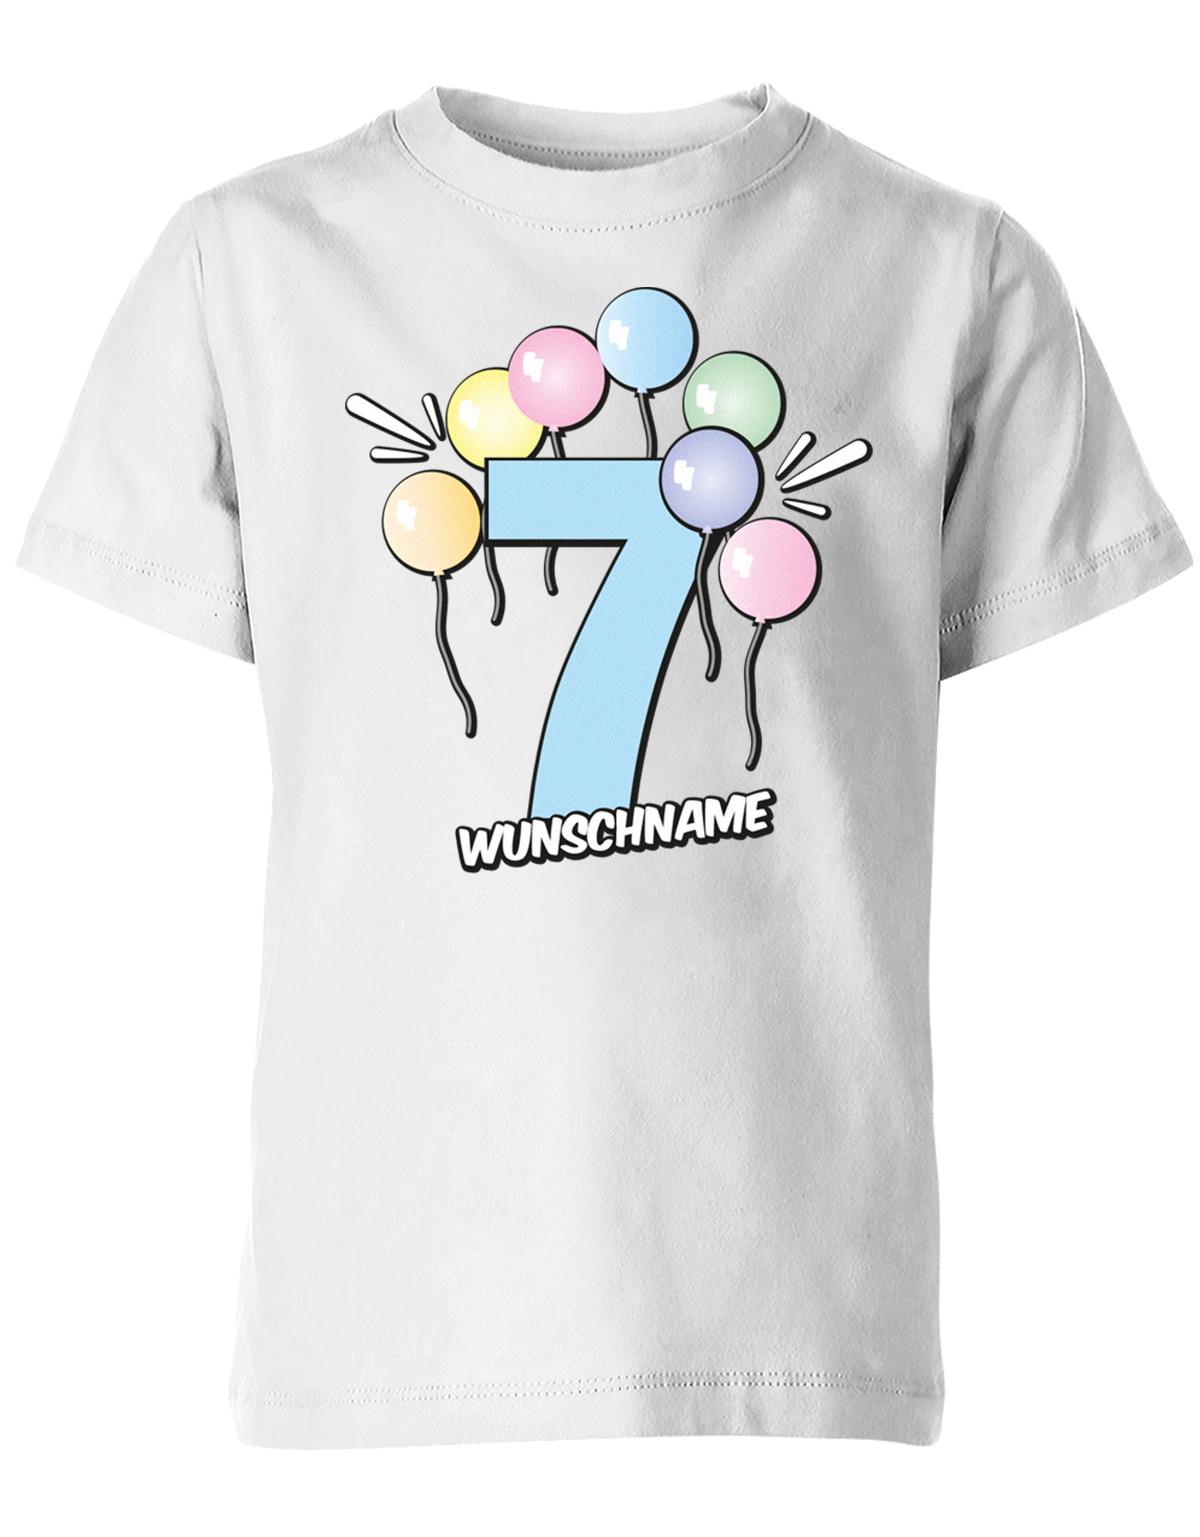 Luftballons-pastell-7-geburtstag-wunschname-kinder-shirt-weiss